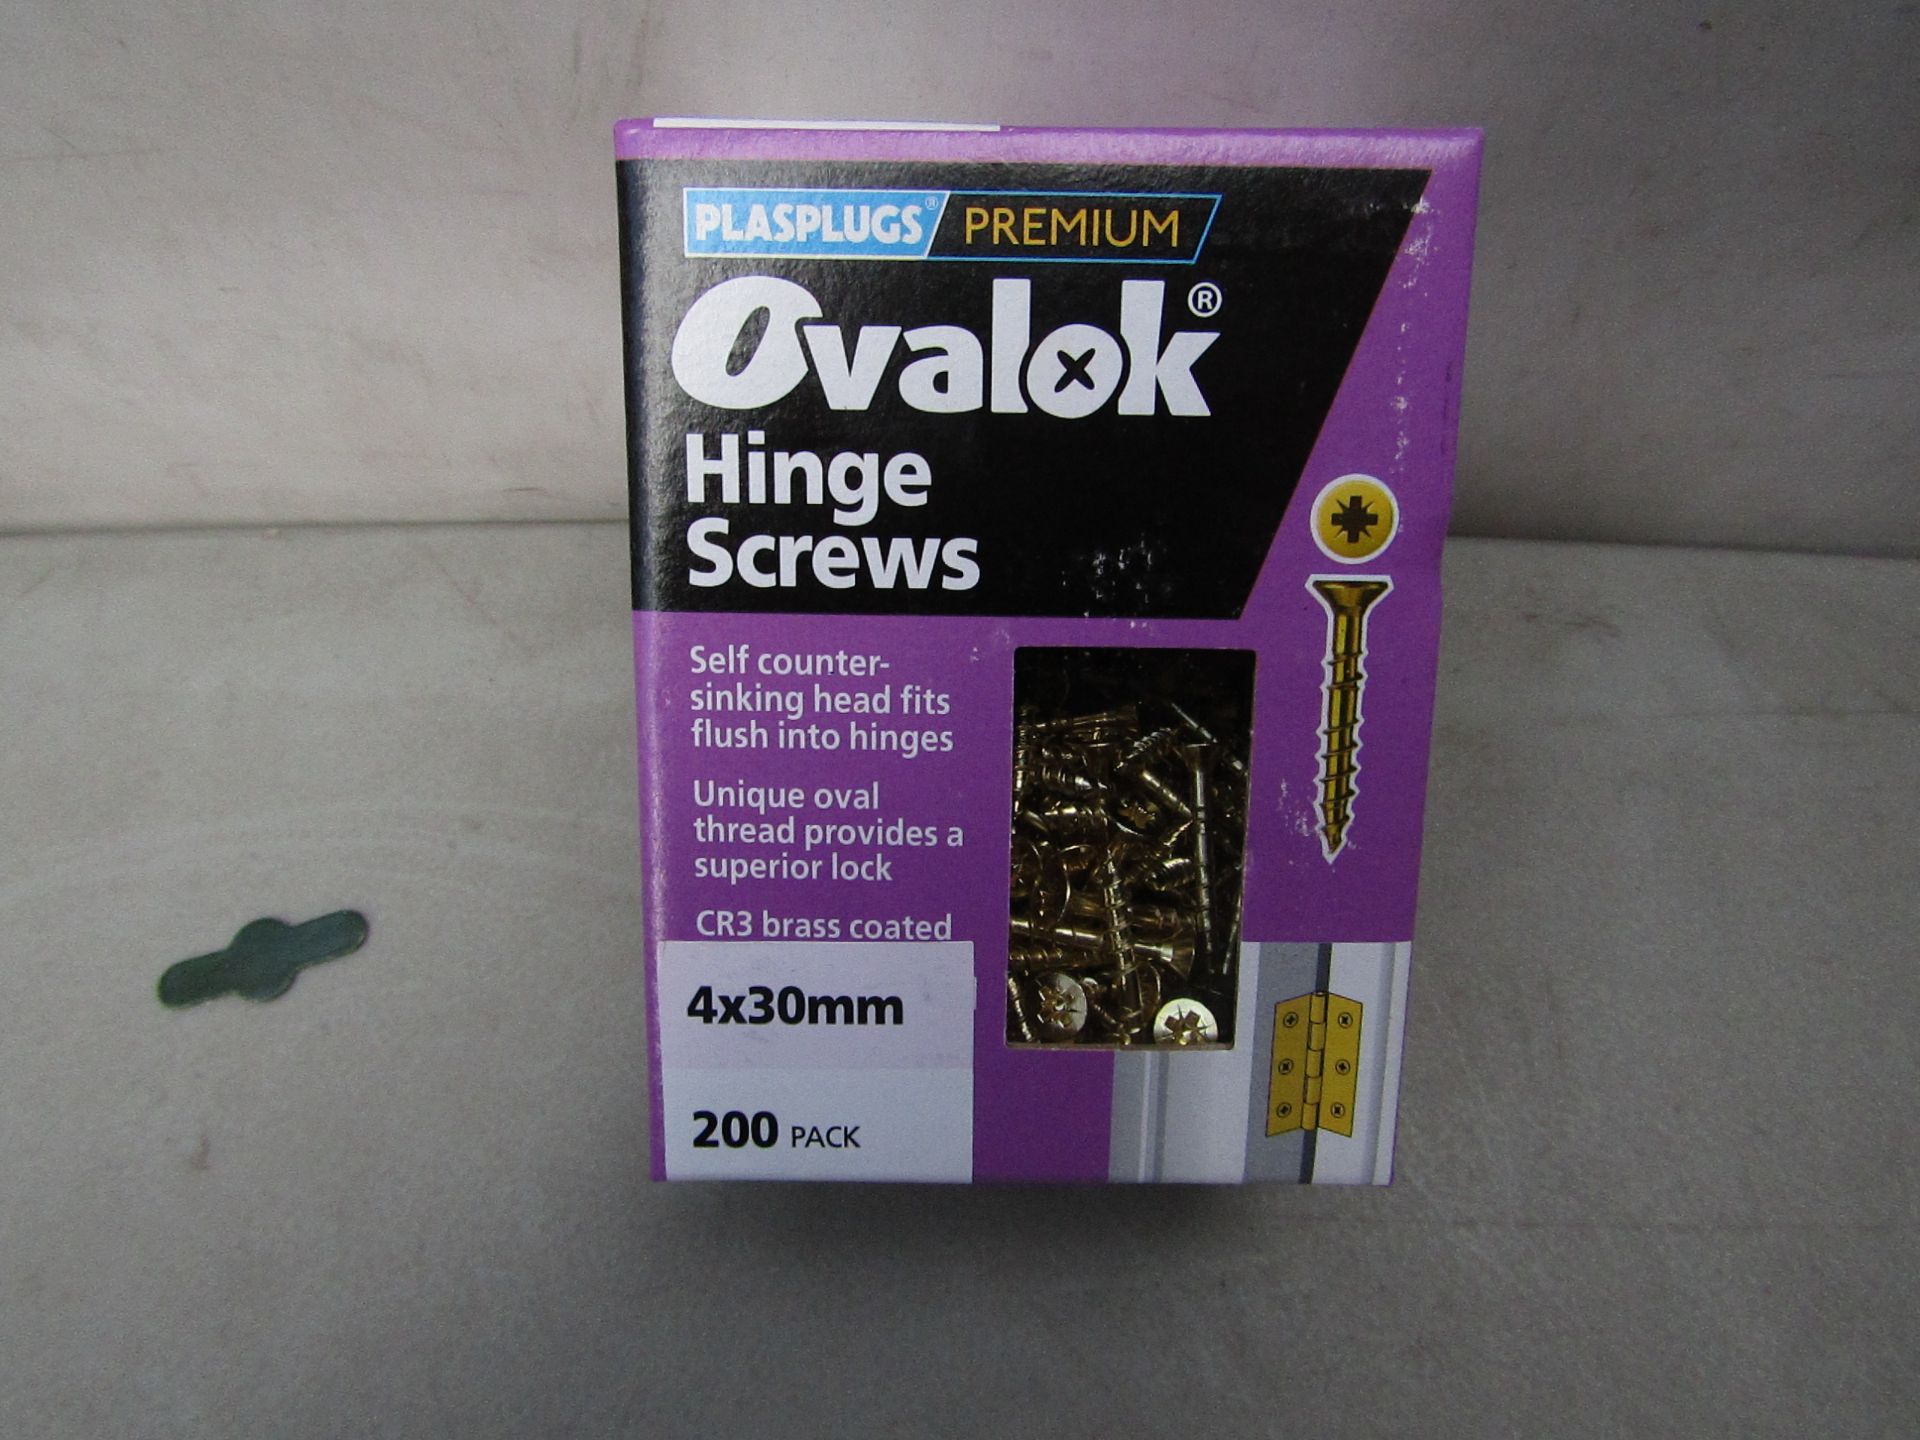 2x Plasplugs - Ovalok Hinge Screws 4x30mm (Pack of 200) - New & Boxed.